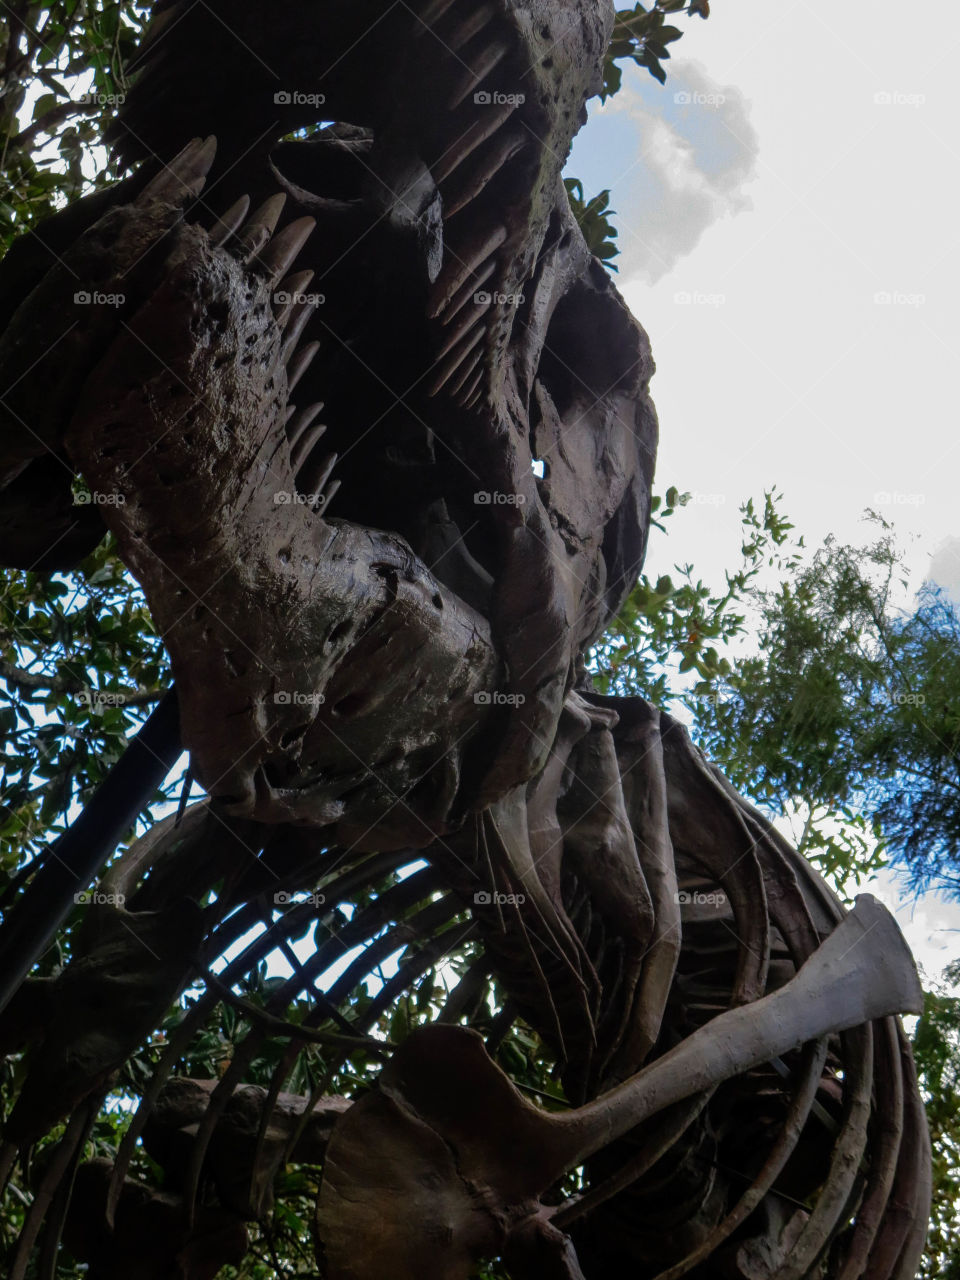 Dinosaur "bones" in the queue line for the Dinosaur ride at Disney's Animal Kingdom.